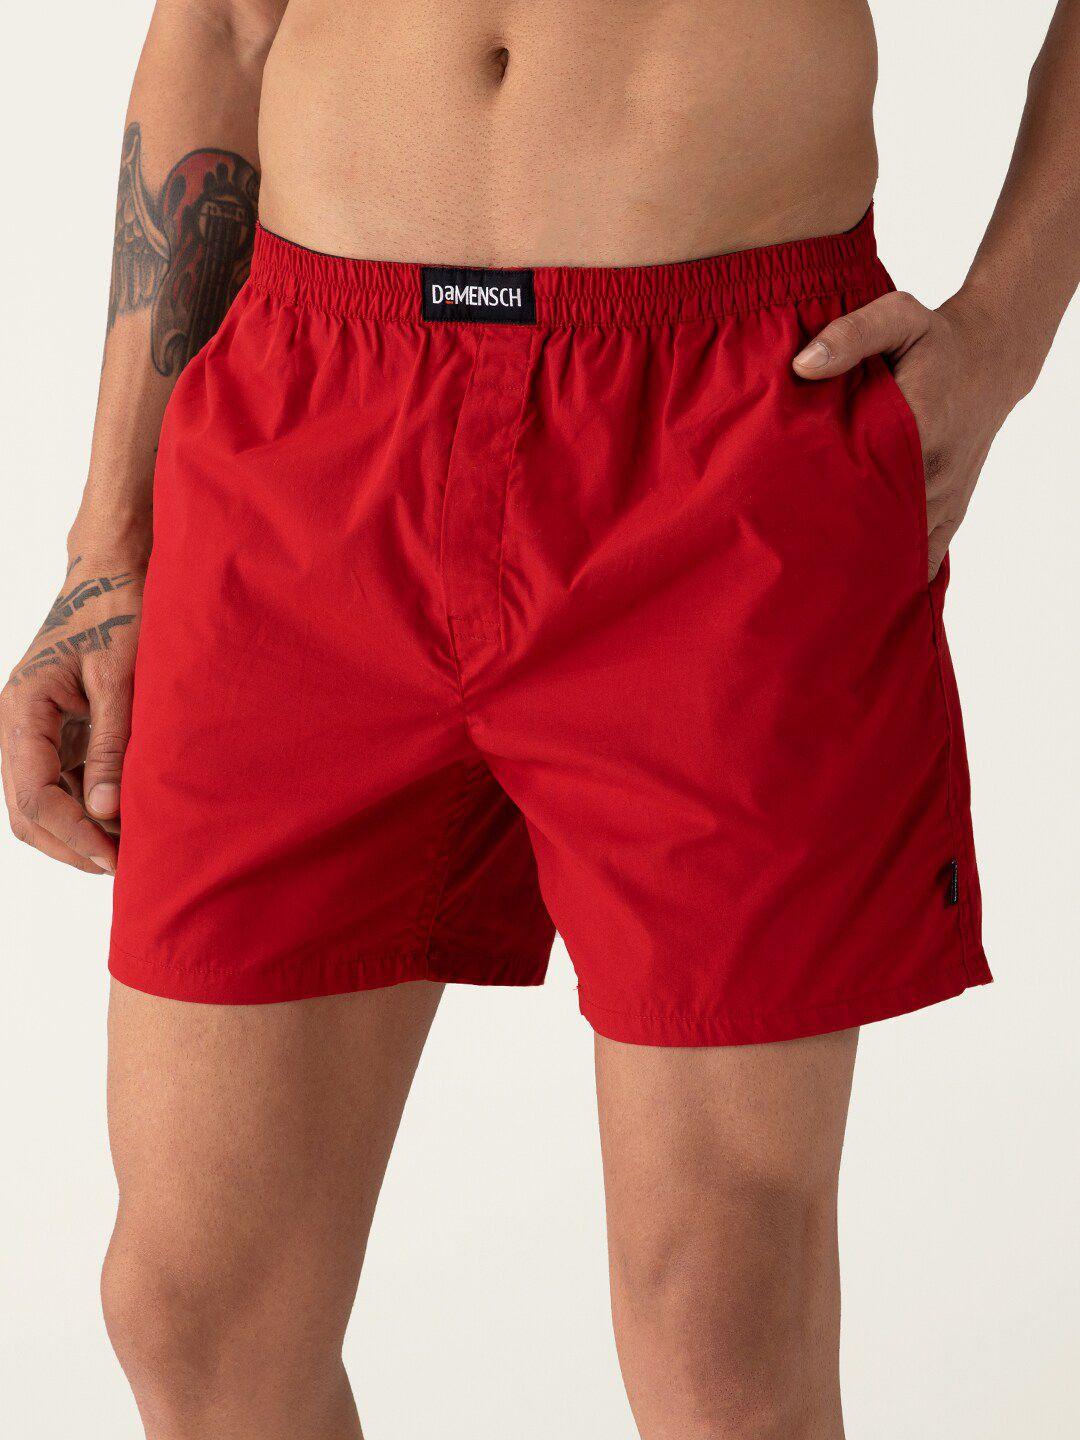 damensch breeeze men red solid ultra-light boxers pure cotton boxers dam-sld-lbx-low